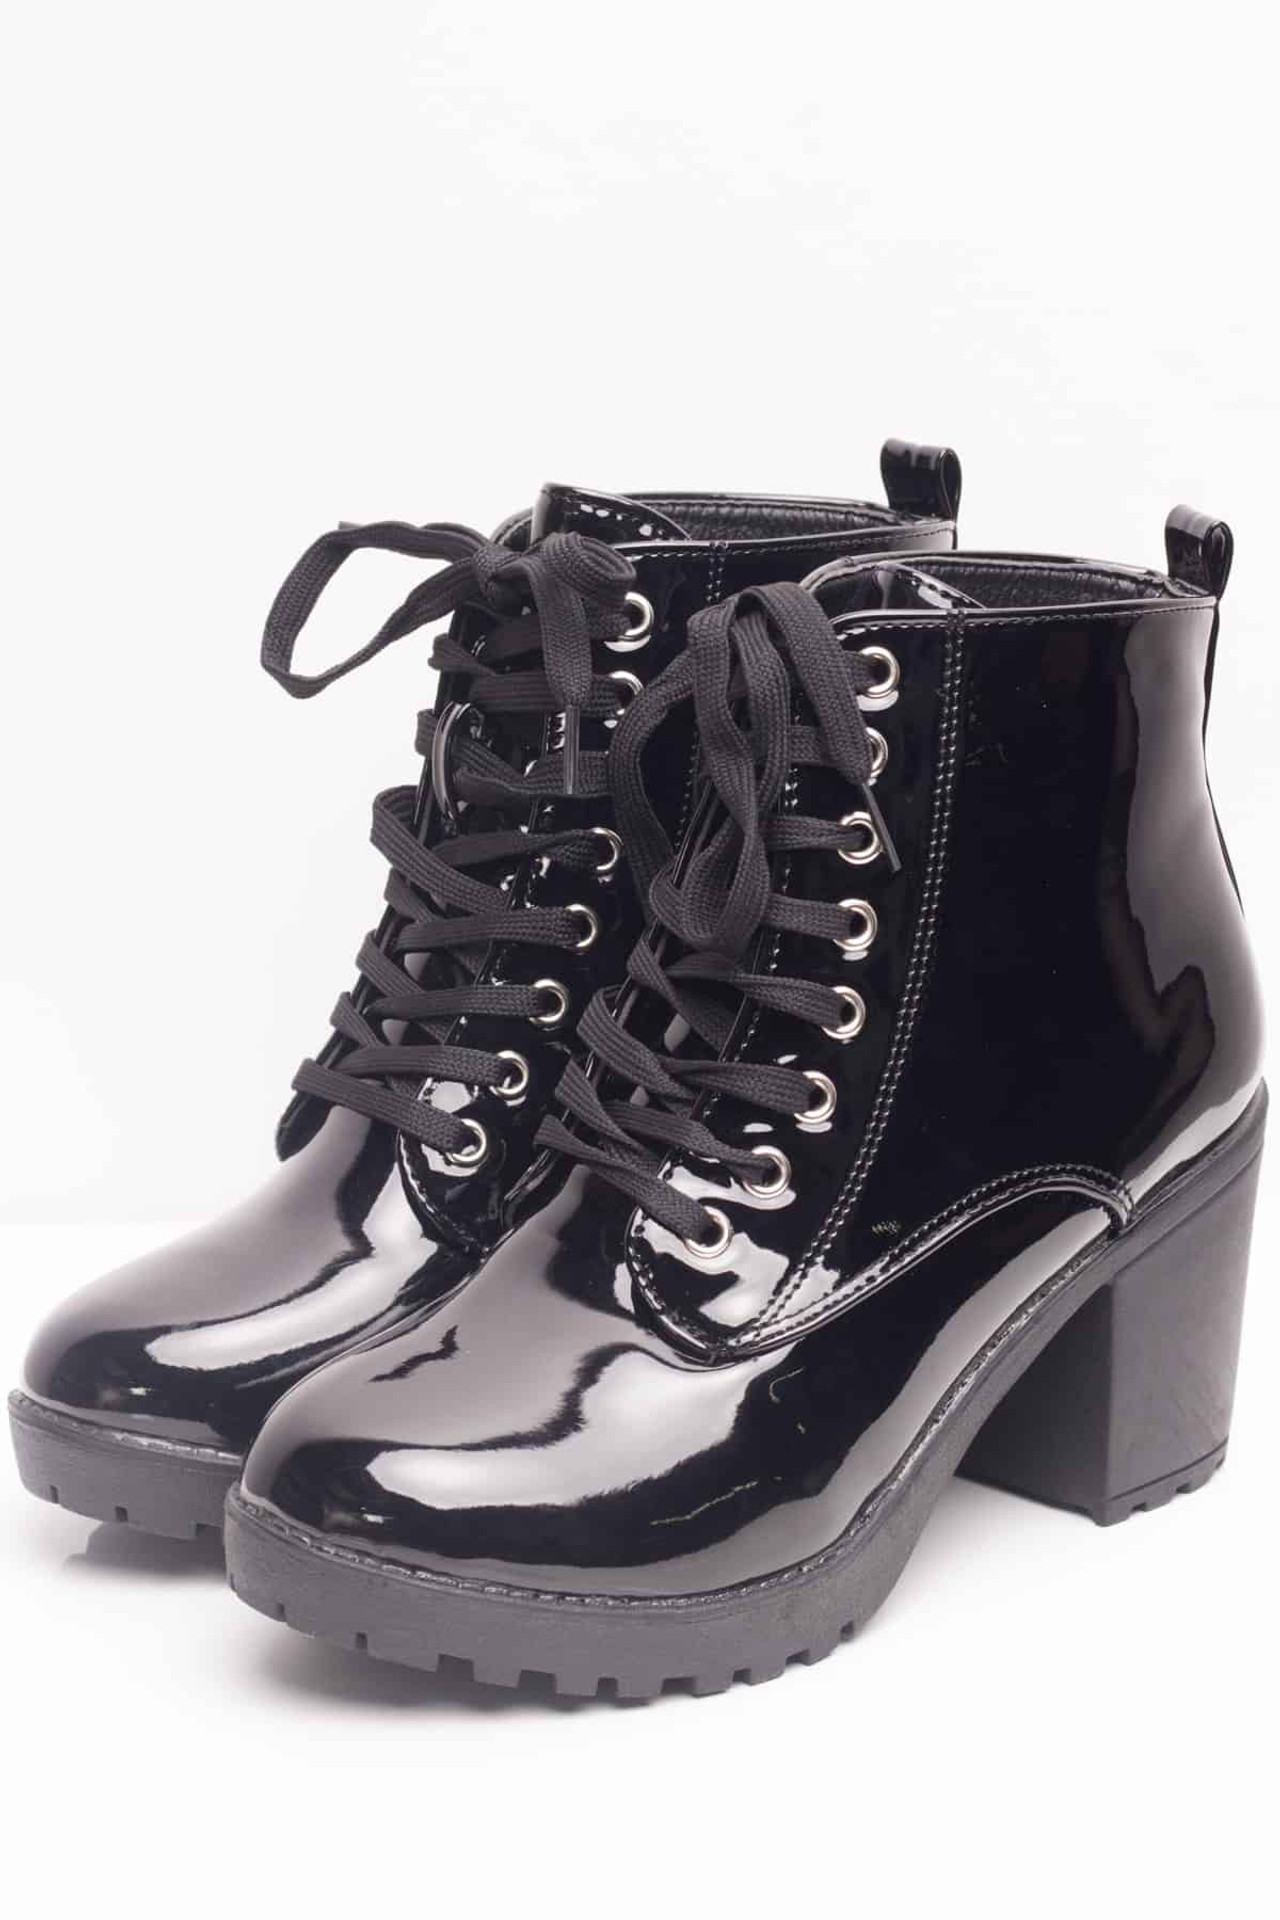 Black Patent Laceup Boots - Ragstock.com